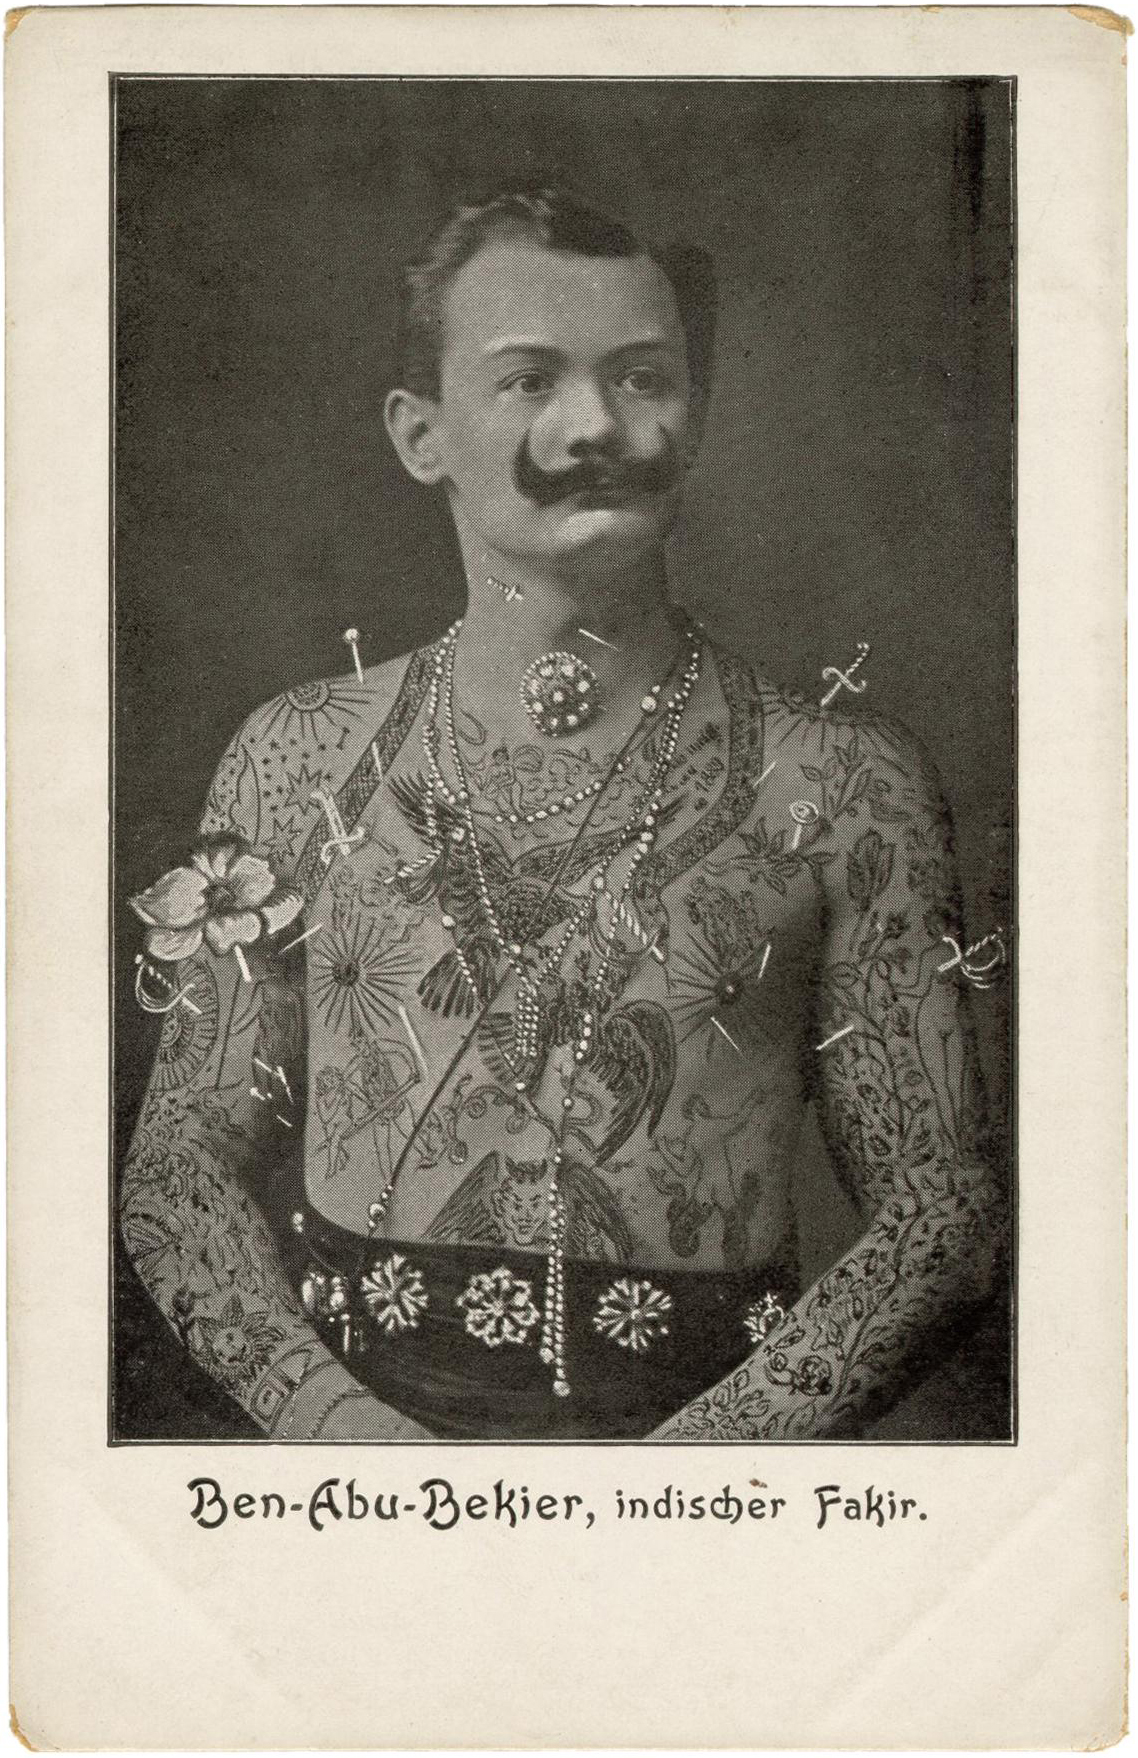 Postcard of Ben Abu Bekier, Tattooed “Indian Fakir.” Germany, ca. 1910s.